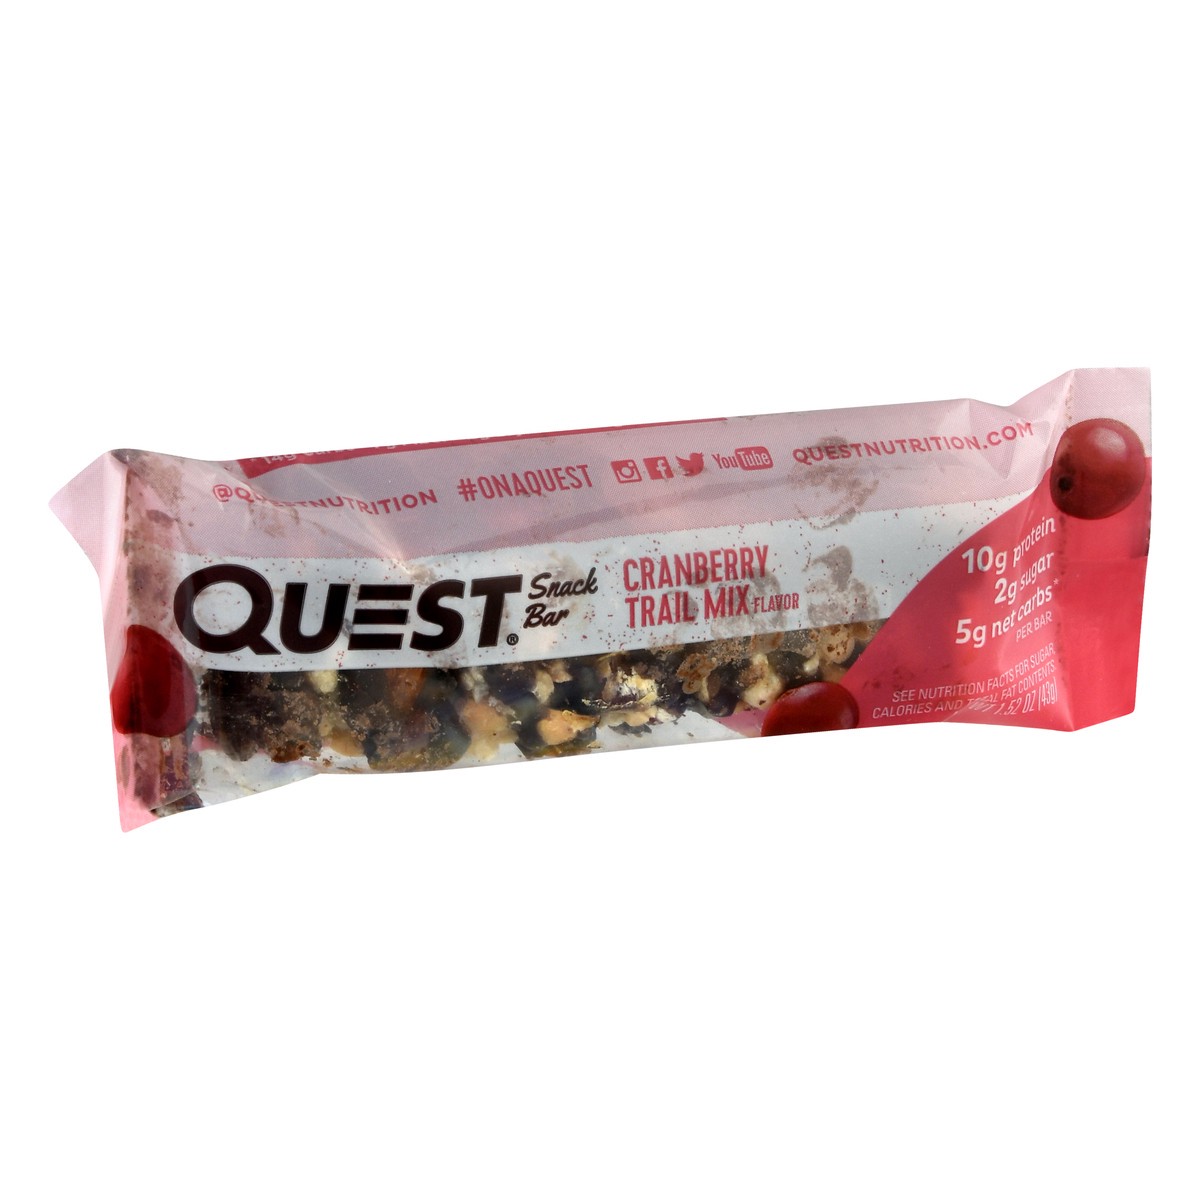 slide 2 of 10, Quest Cranberry Trail Mix Flavor Snack Bar 1.52 oz, 1 ct